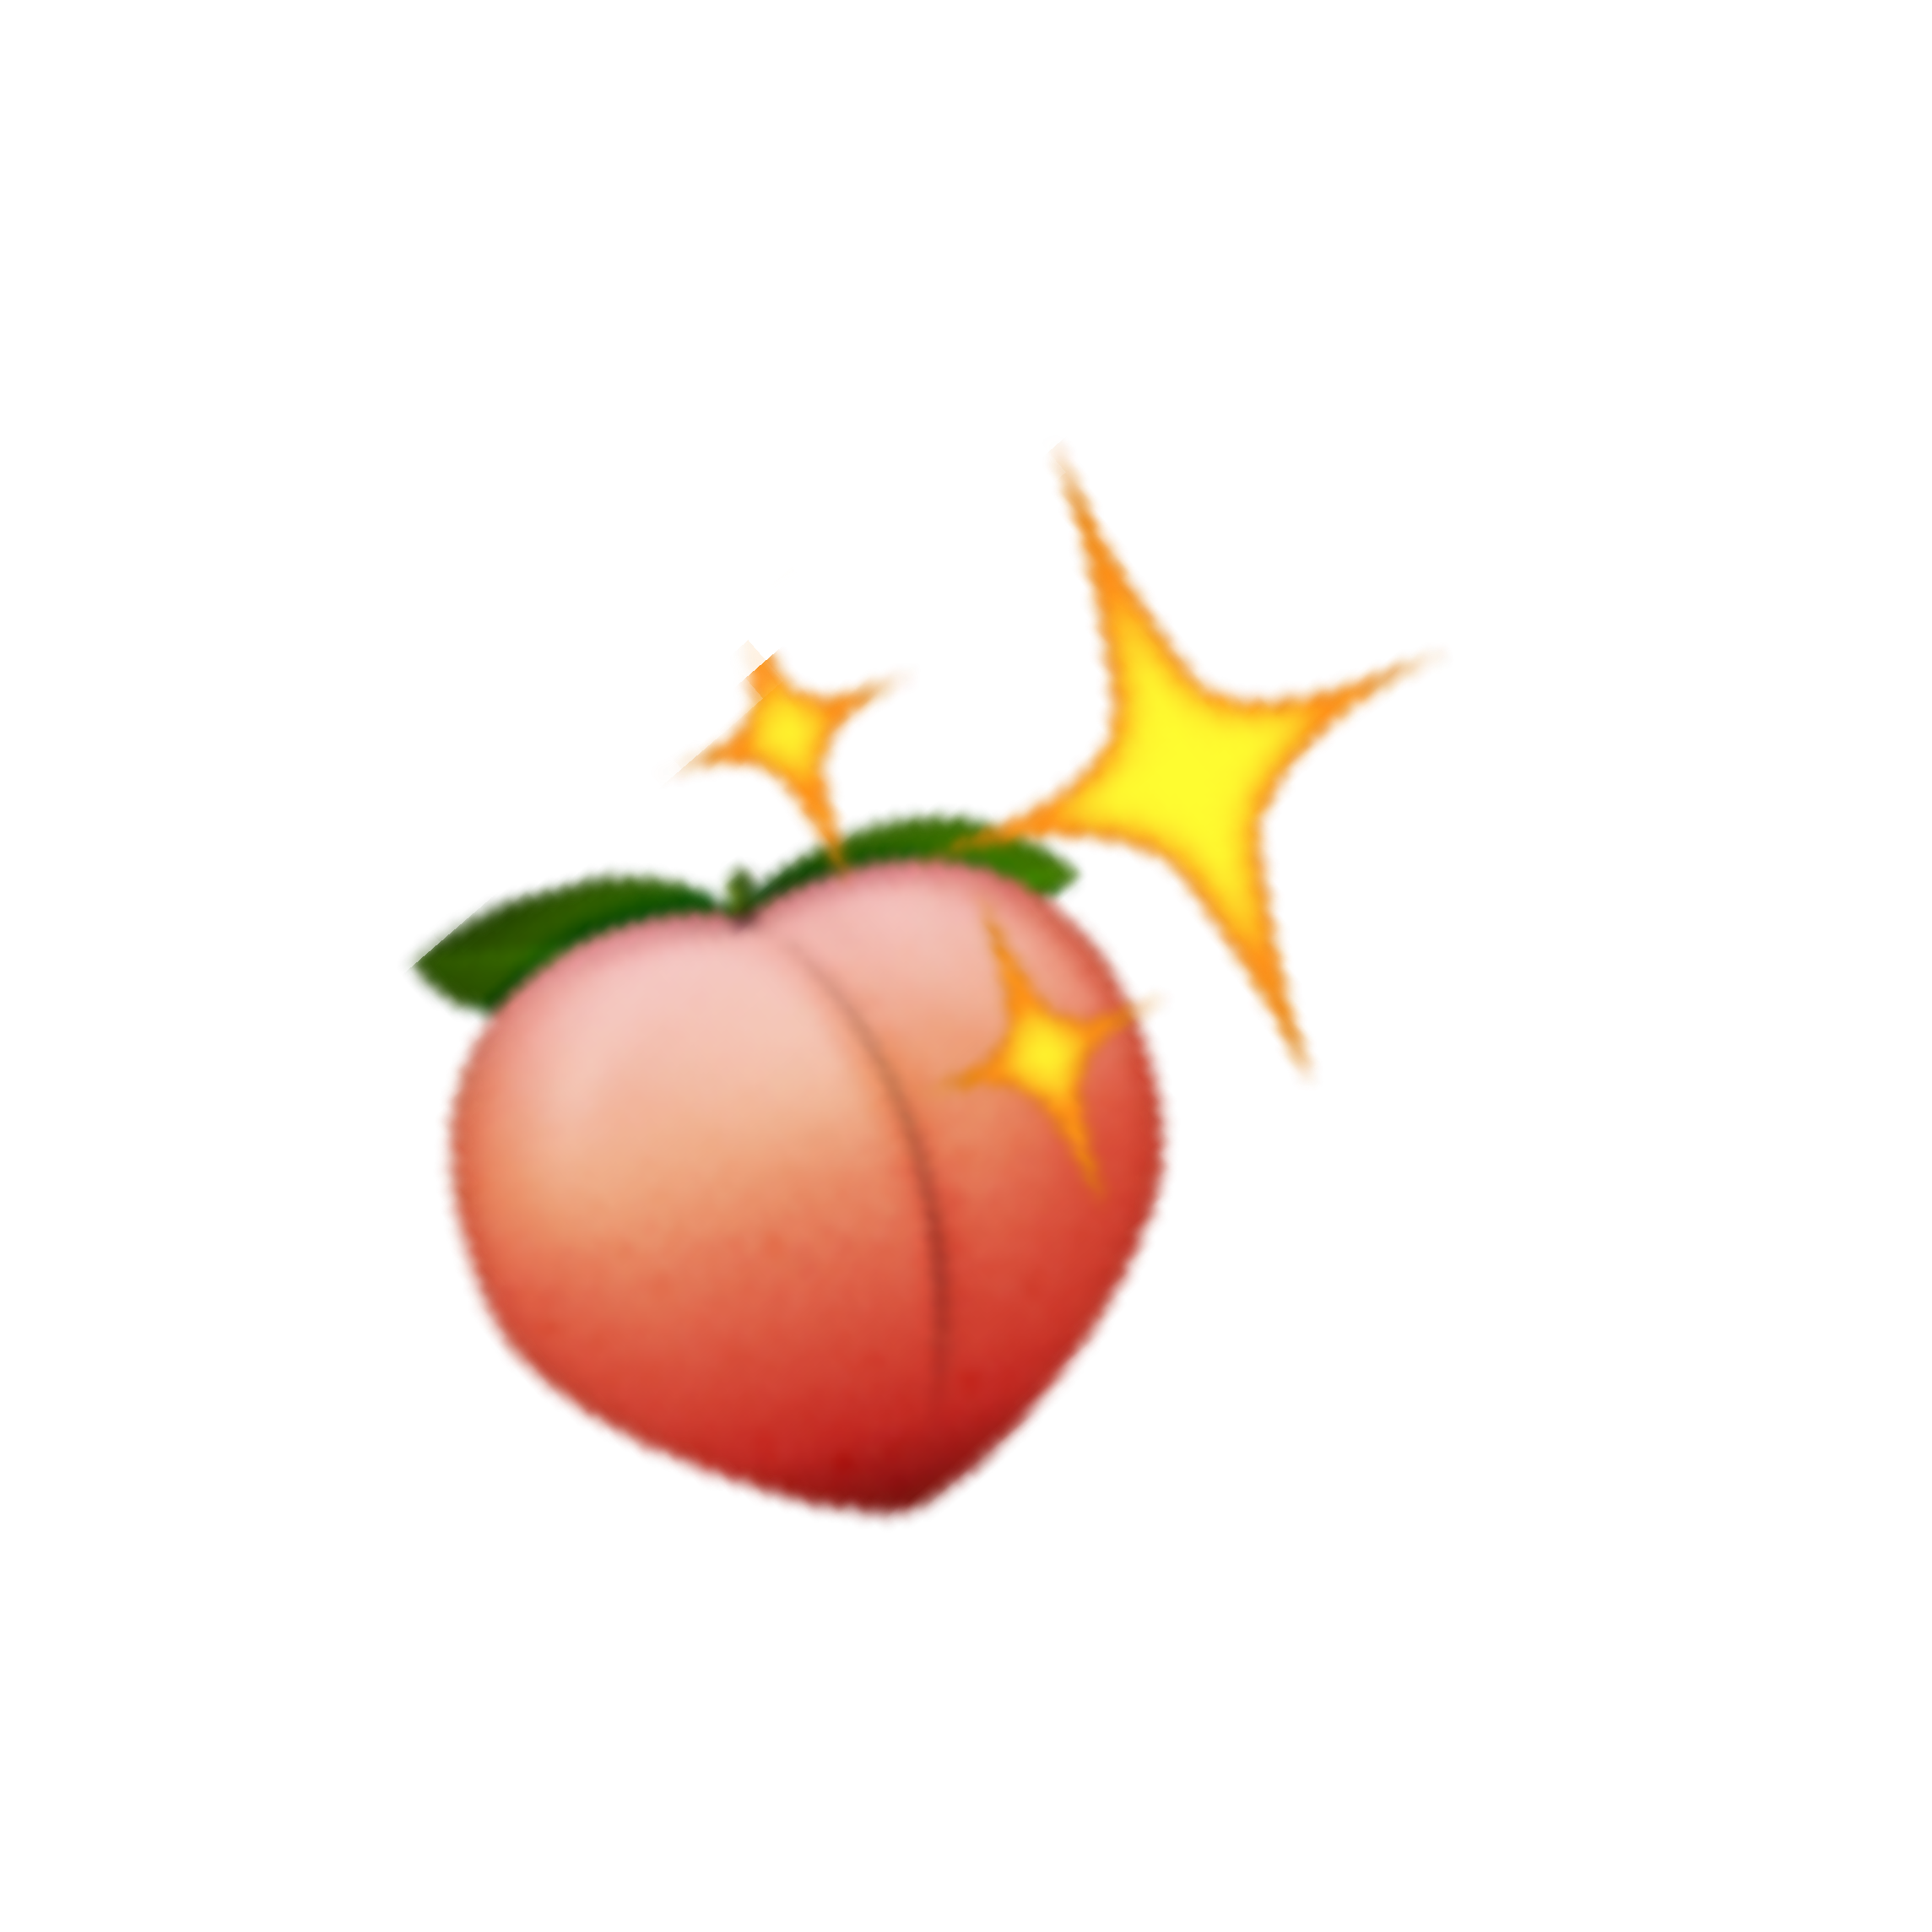 peach sparkling emoji emojis sticker by @xngerouswoman.